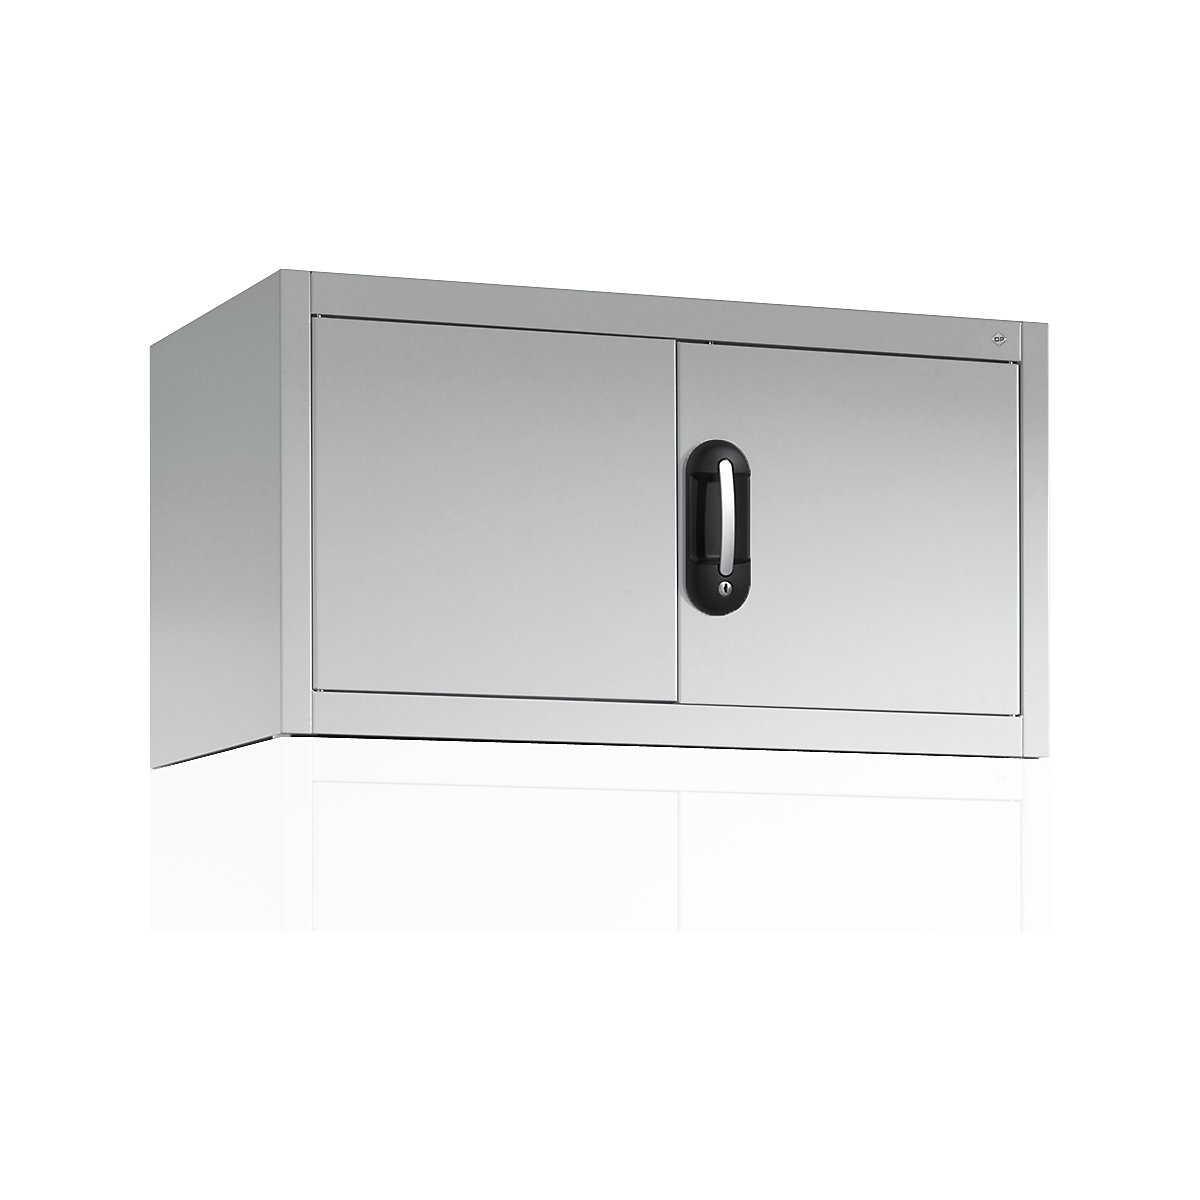 Nástavná skříň s otočnými dveřmi ACURADO – C+P, v x š x h 500 x 930 x 400 mm, světle šedá-6